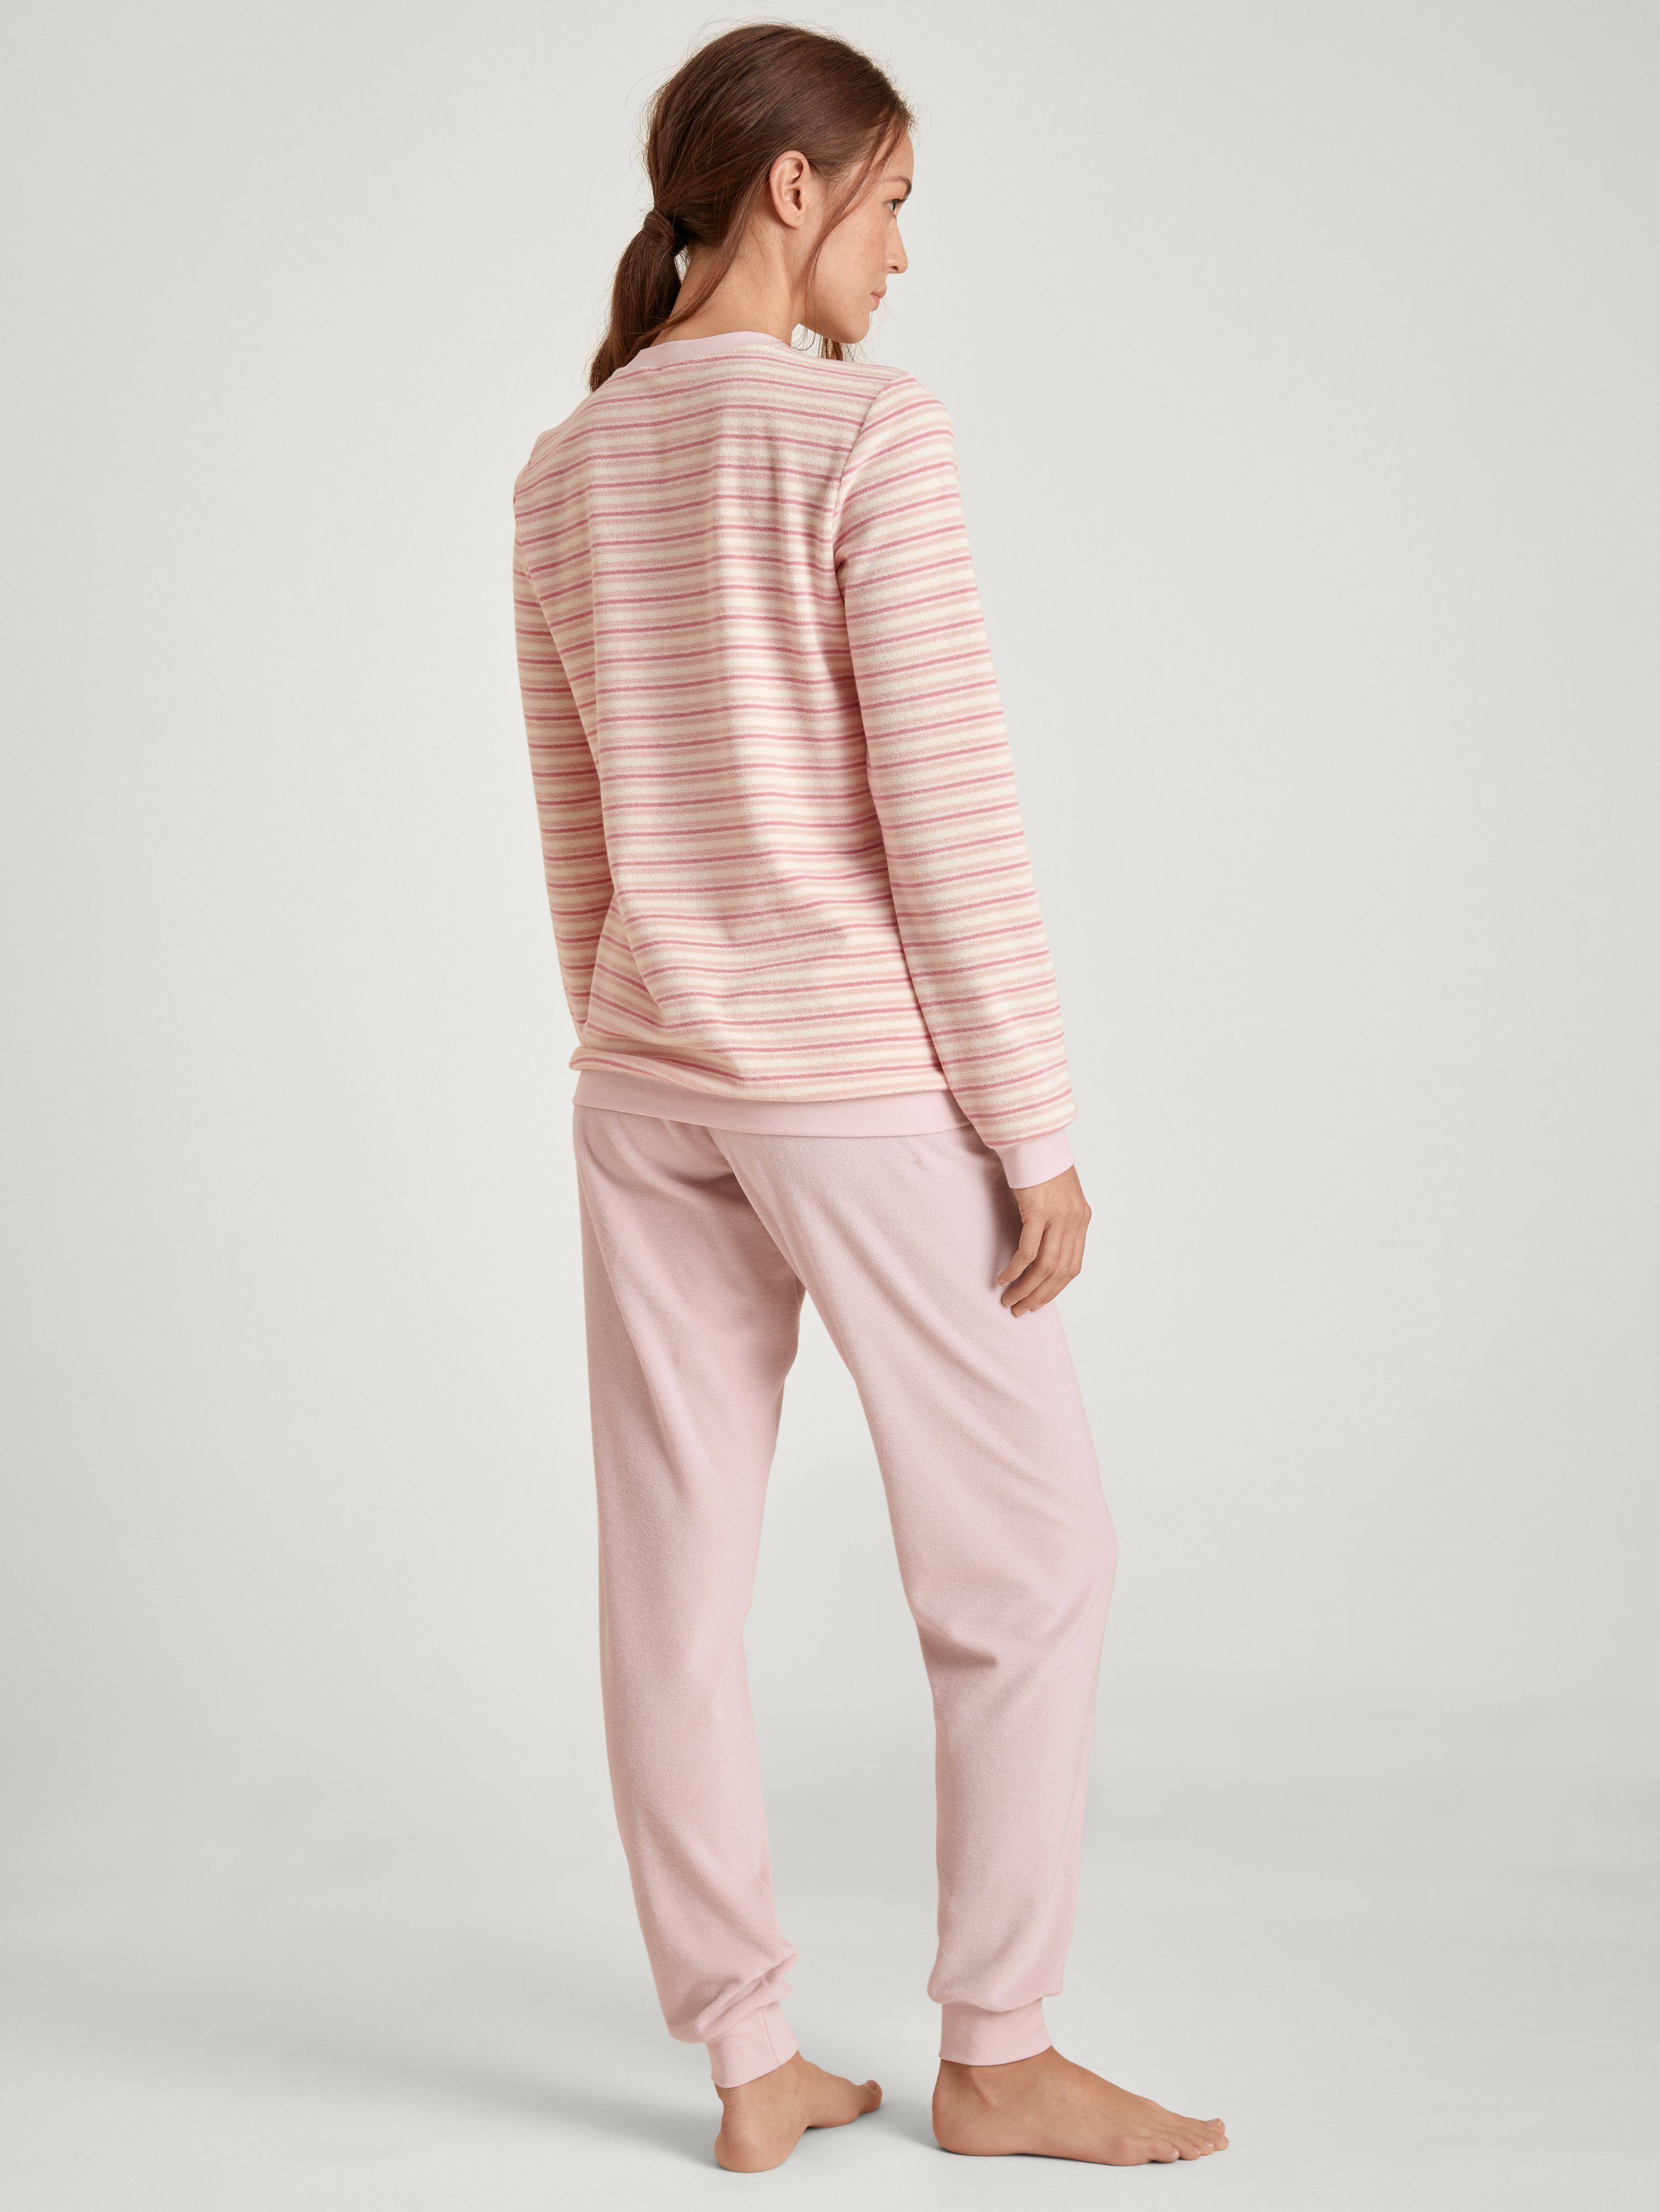 CALIDA Pyjama Calida Stück) (1 1 1 41693 Rose tlg., Bündchenpyjama Damen Stück, peach